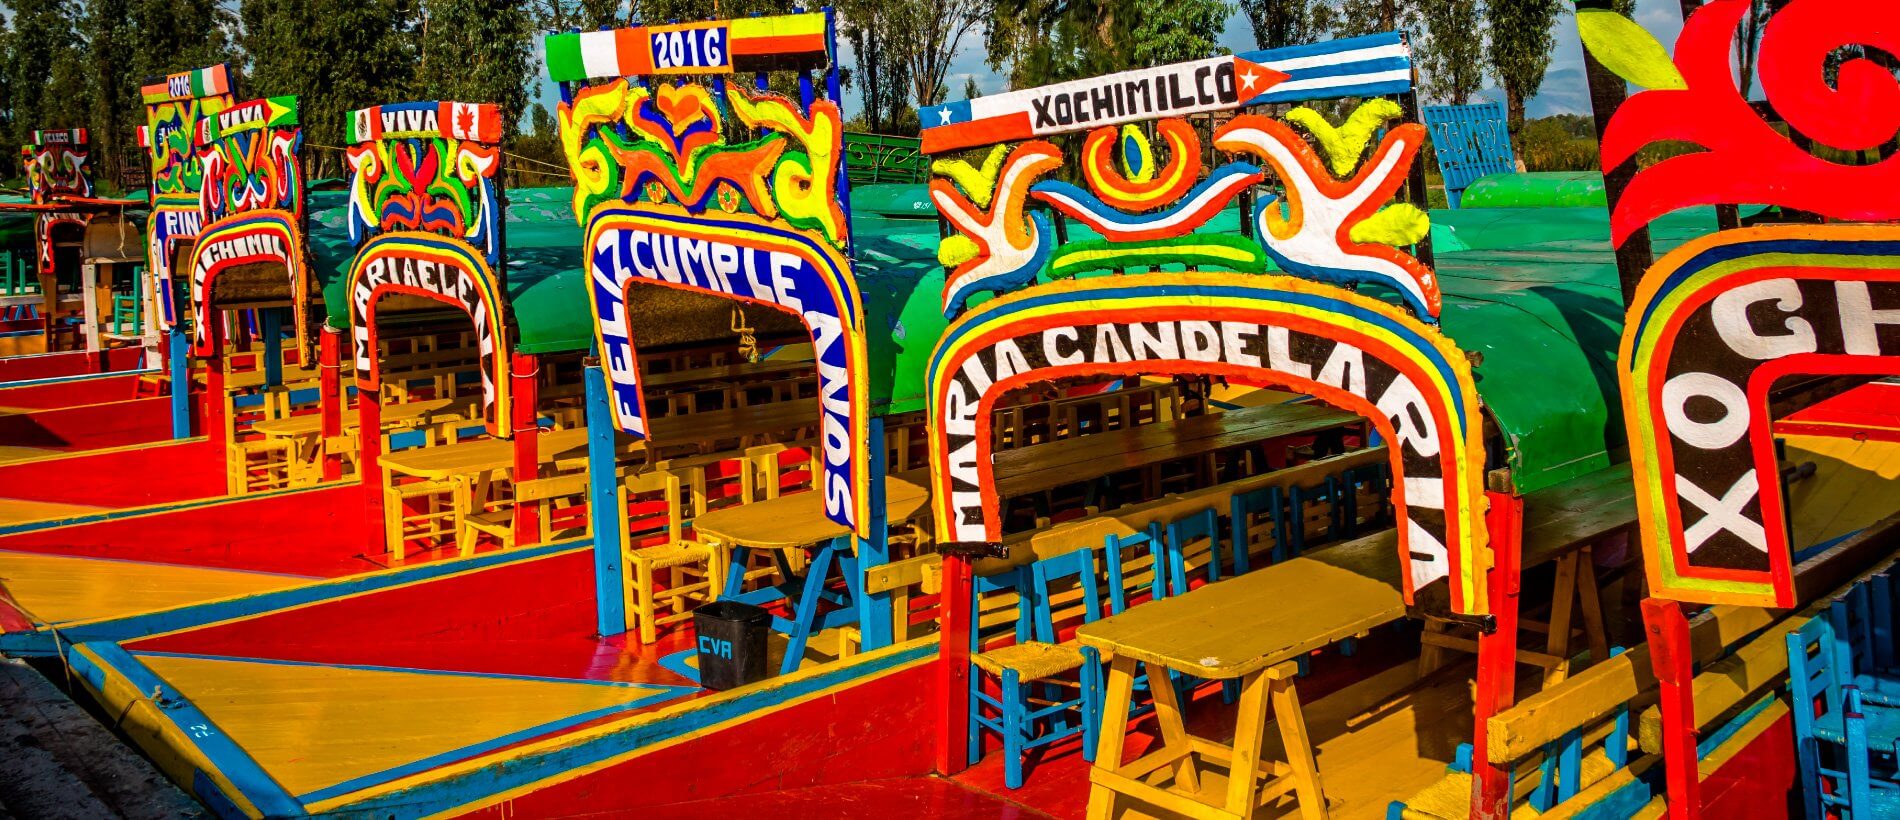 Tour Xochimilco & Coyoacan